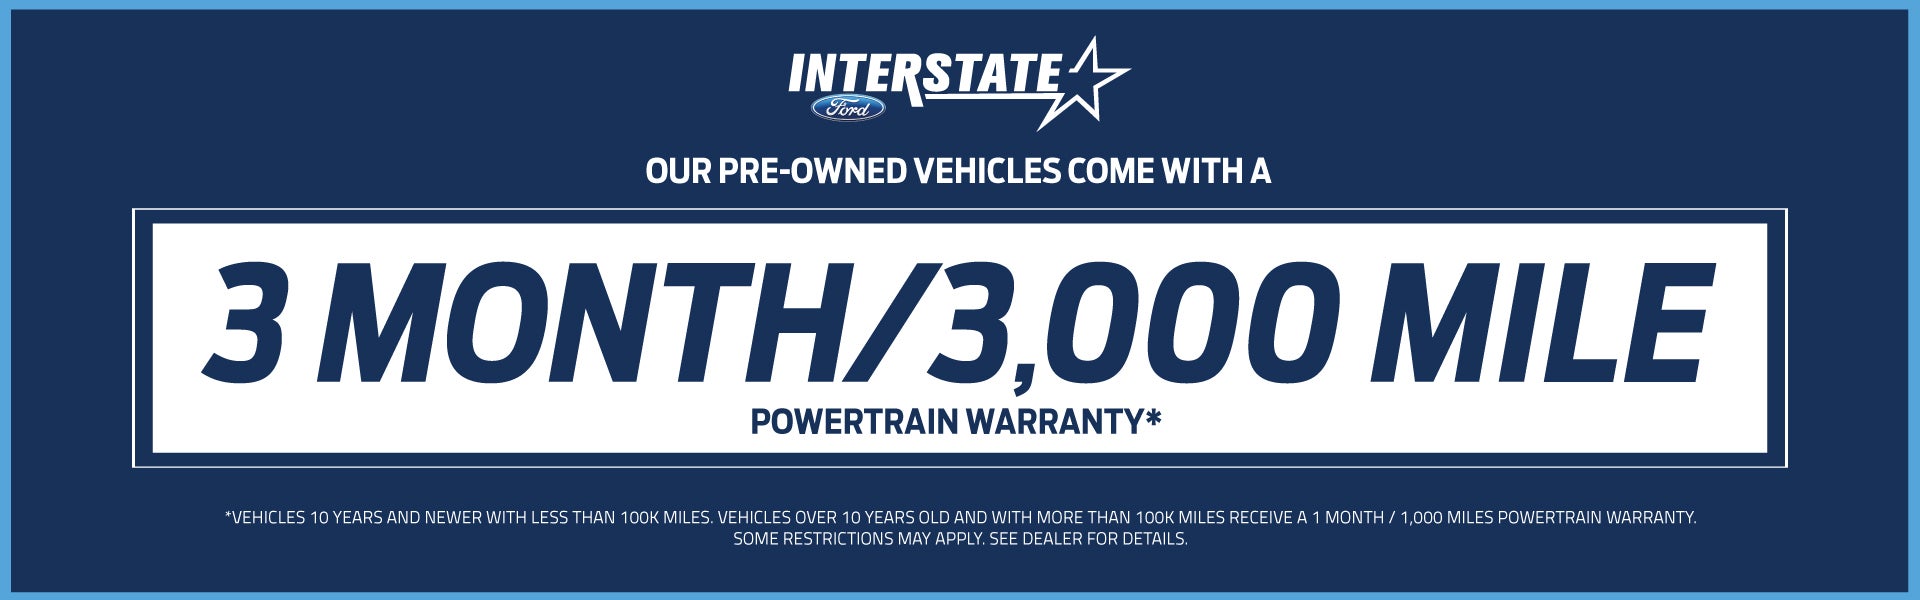 Preowned powertrain warranty